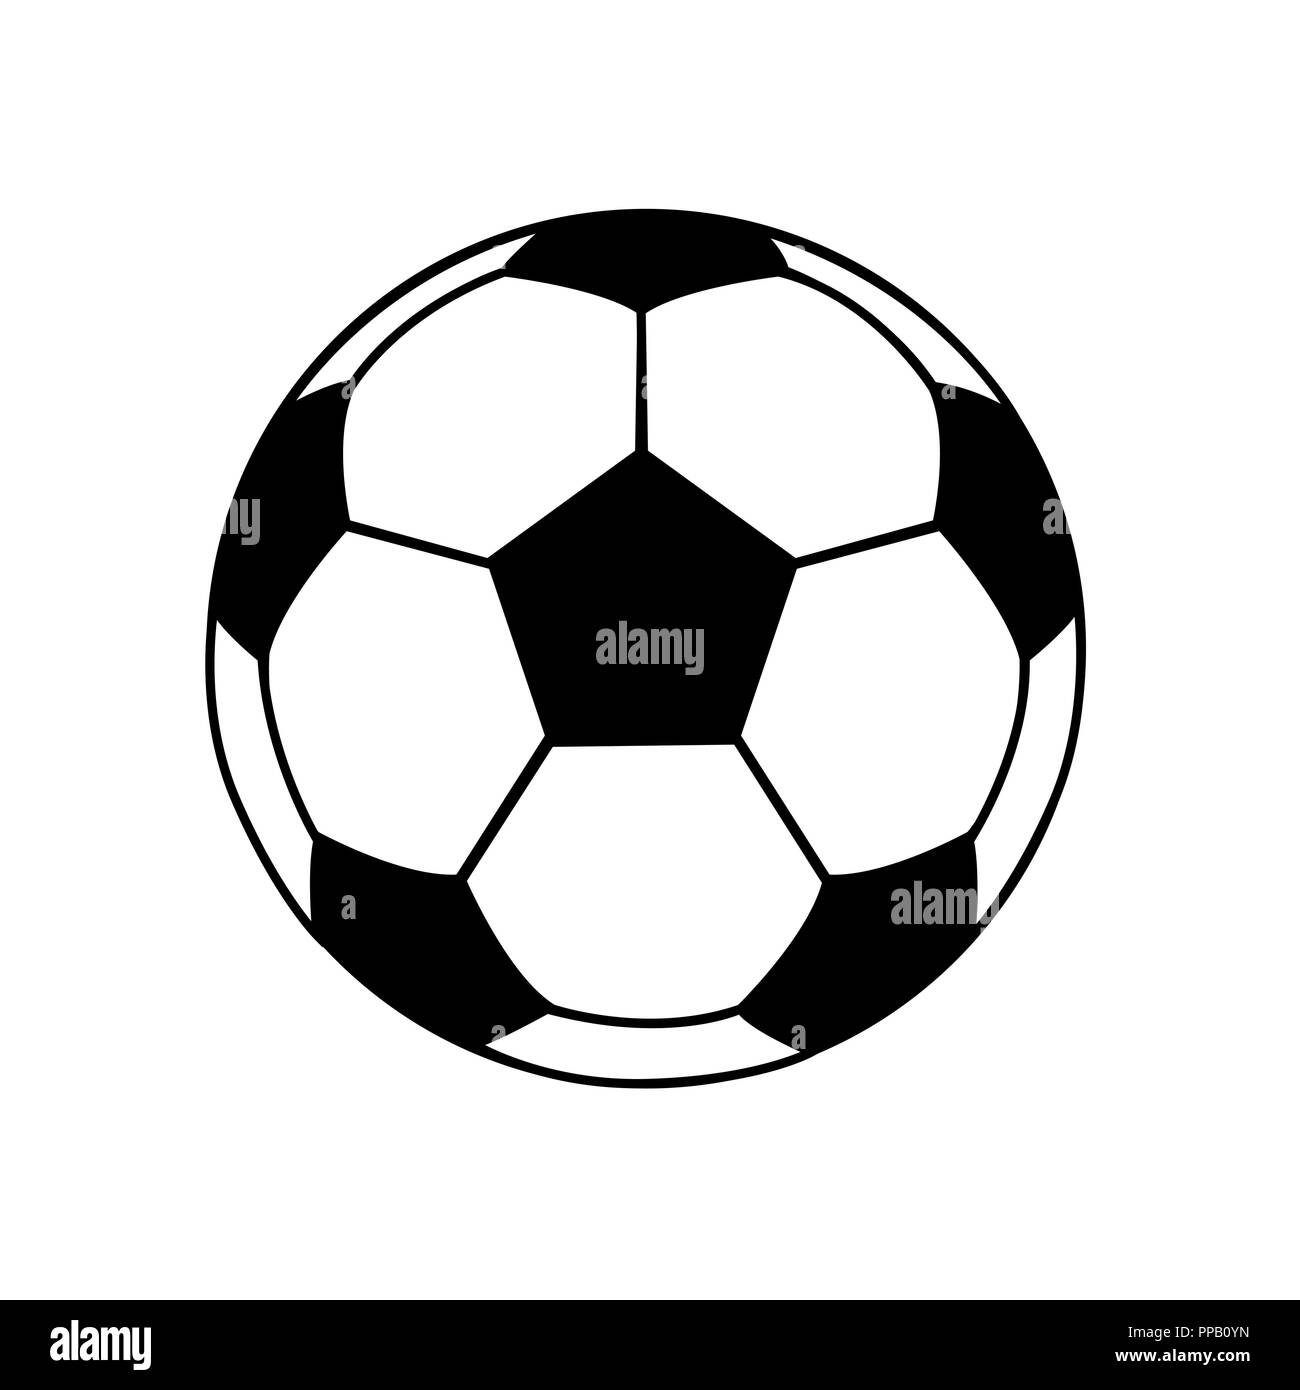 Ballon de football icon isolé sur fond blanc pictogramme soccer ball vector illustration EPS10 Illustration de Vecteur